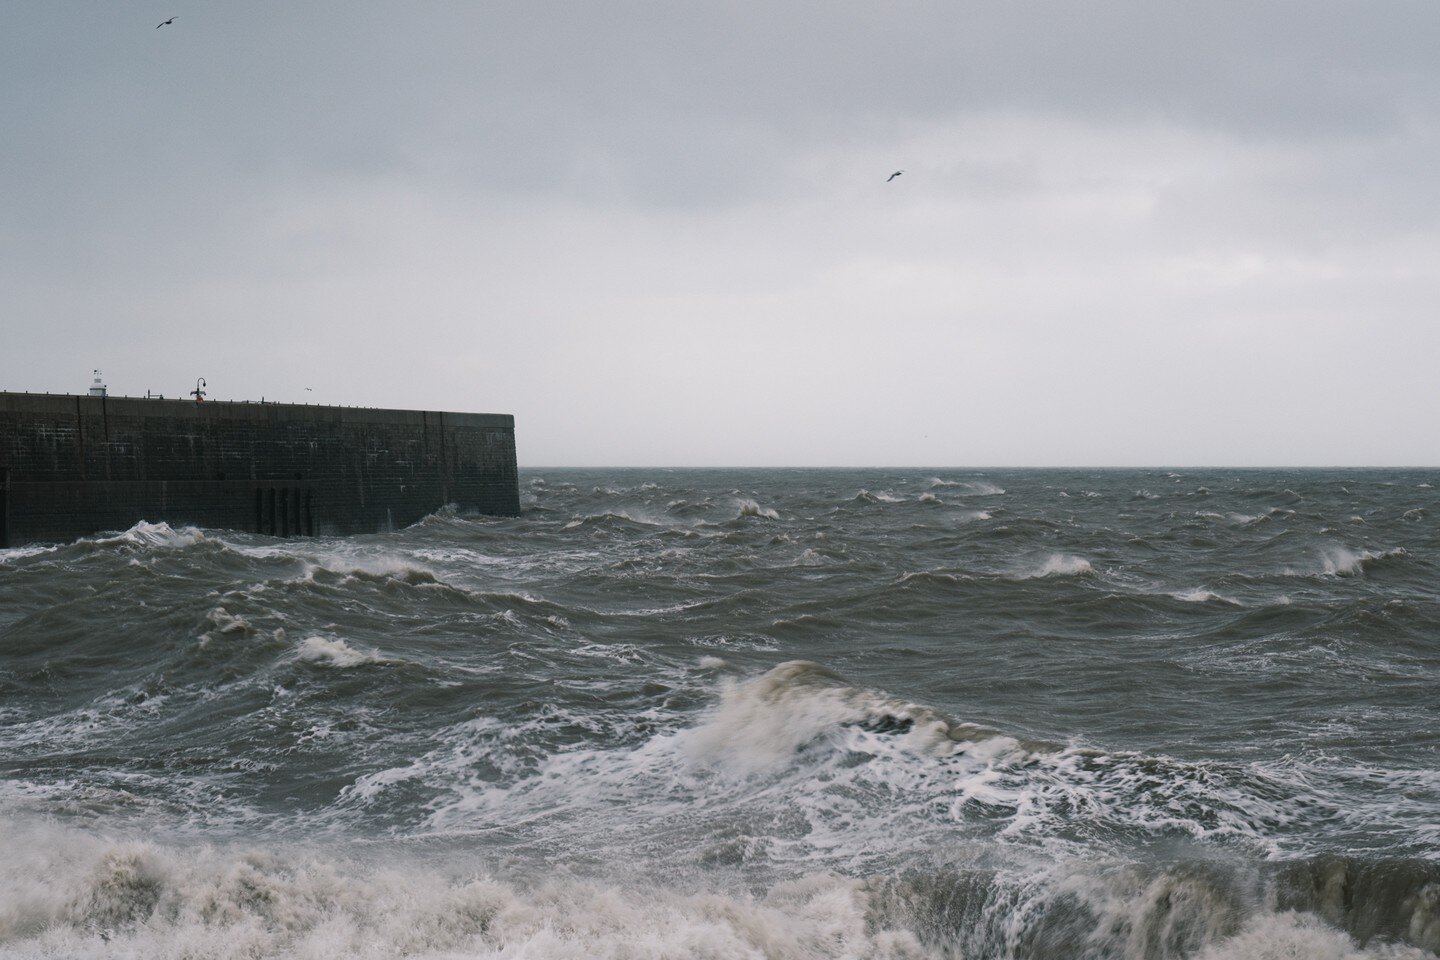 #coastalphotography #britishcoast #folkestone #thechannel #seascape #waves #stormy #kentcoast #fujifilm #fujifilmxt5 #xt5 #folkestoneharbour #folkestoneharbourarm